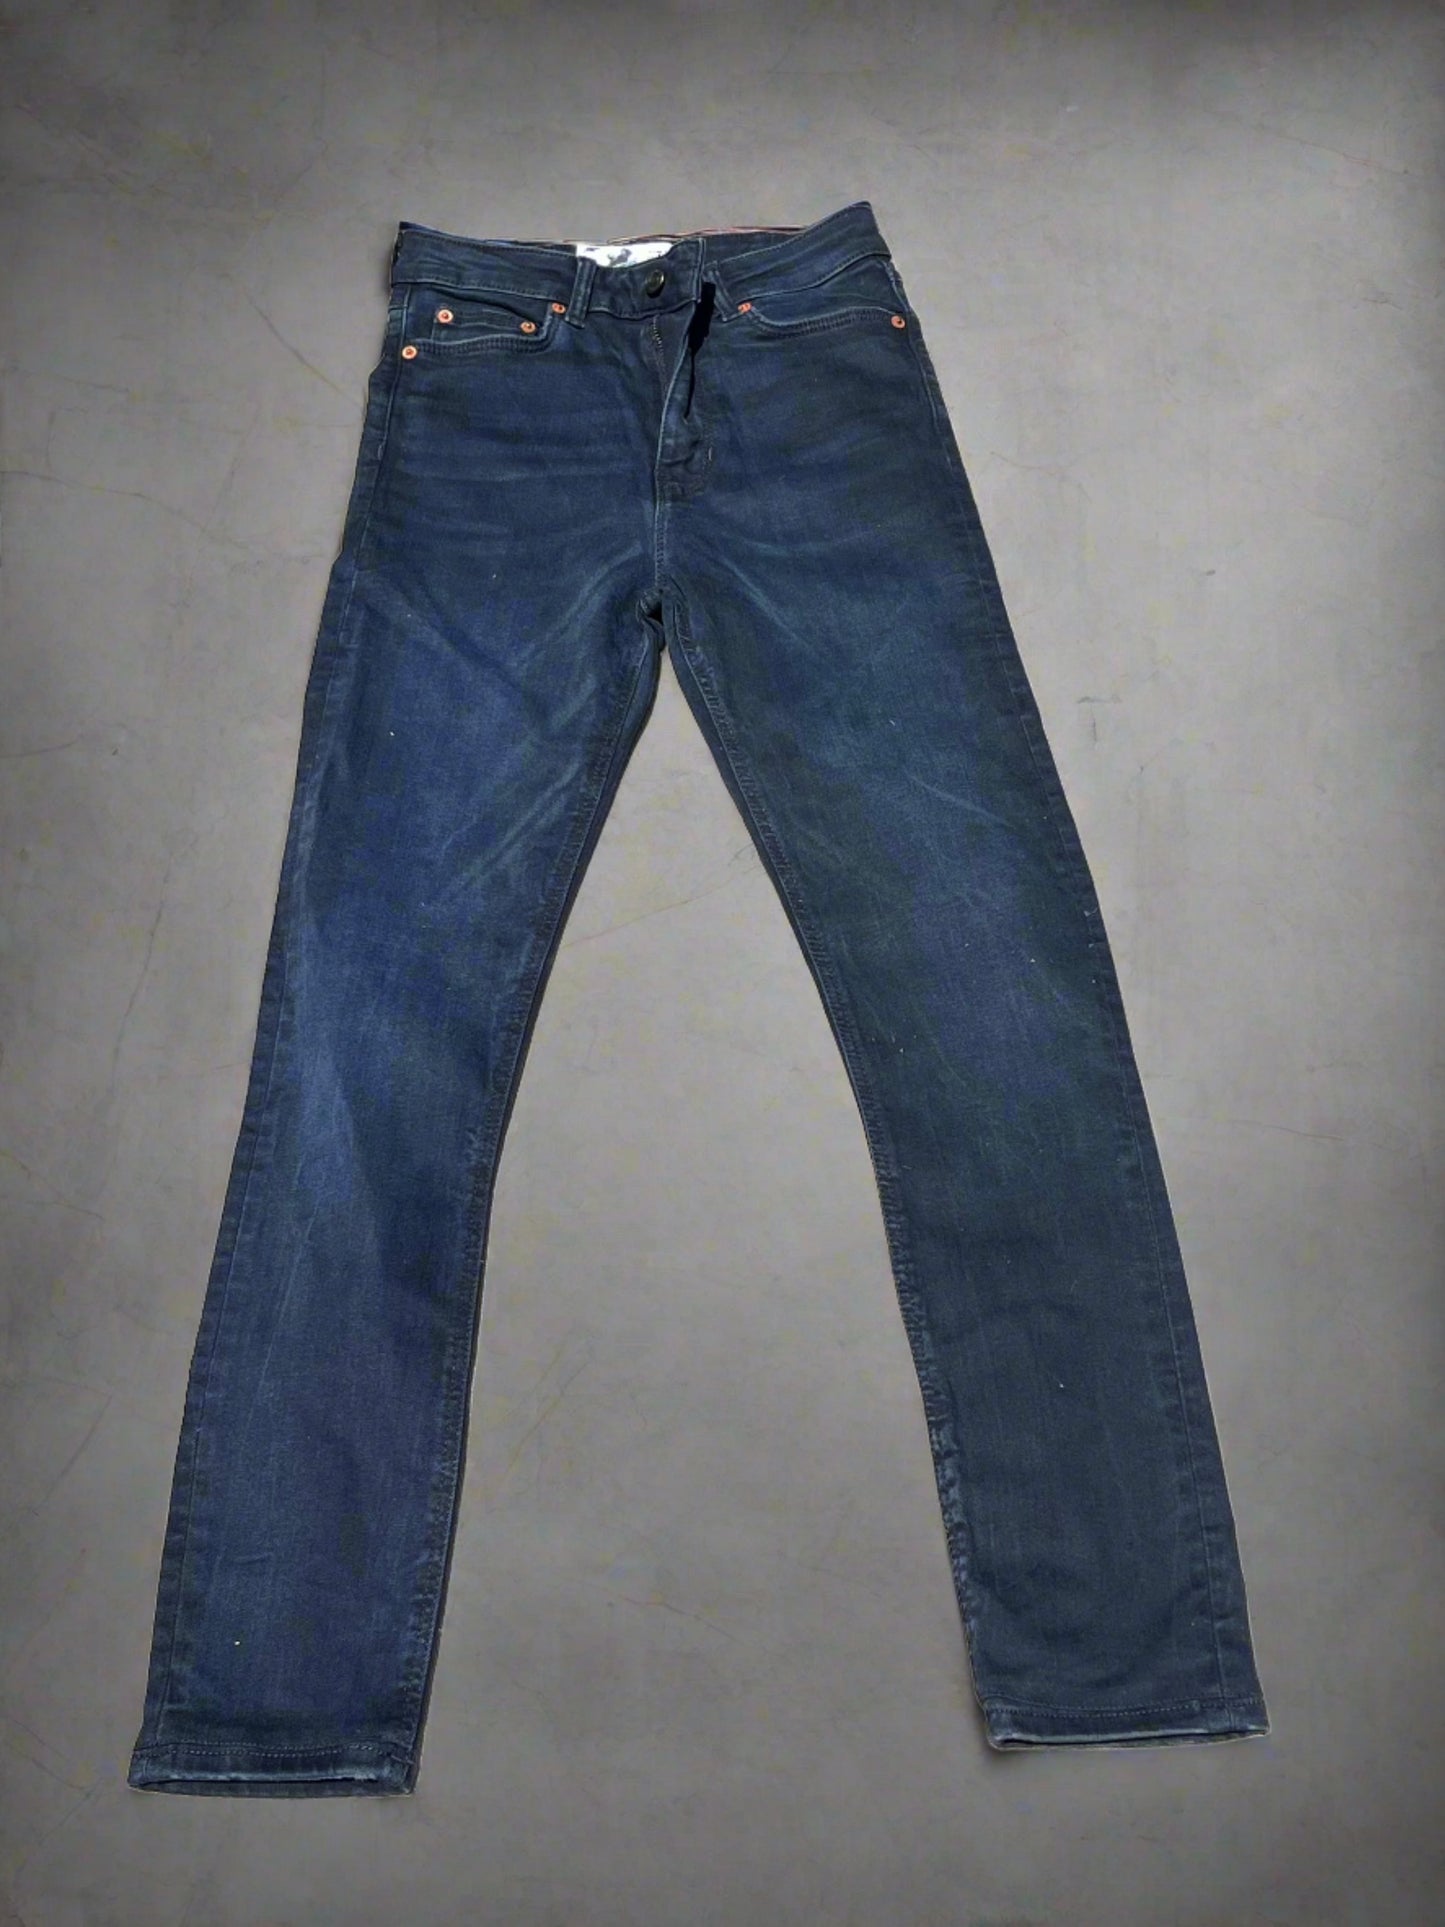 SONS OF ANARCHY: Gemma's Blue Denim Jeans